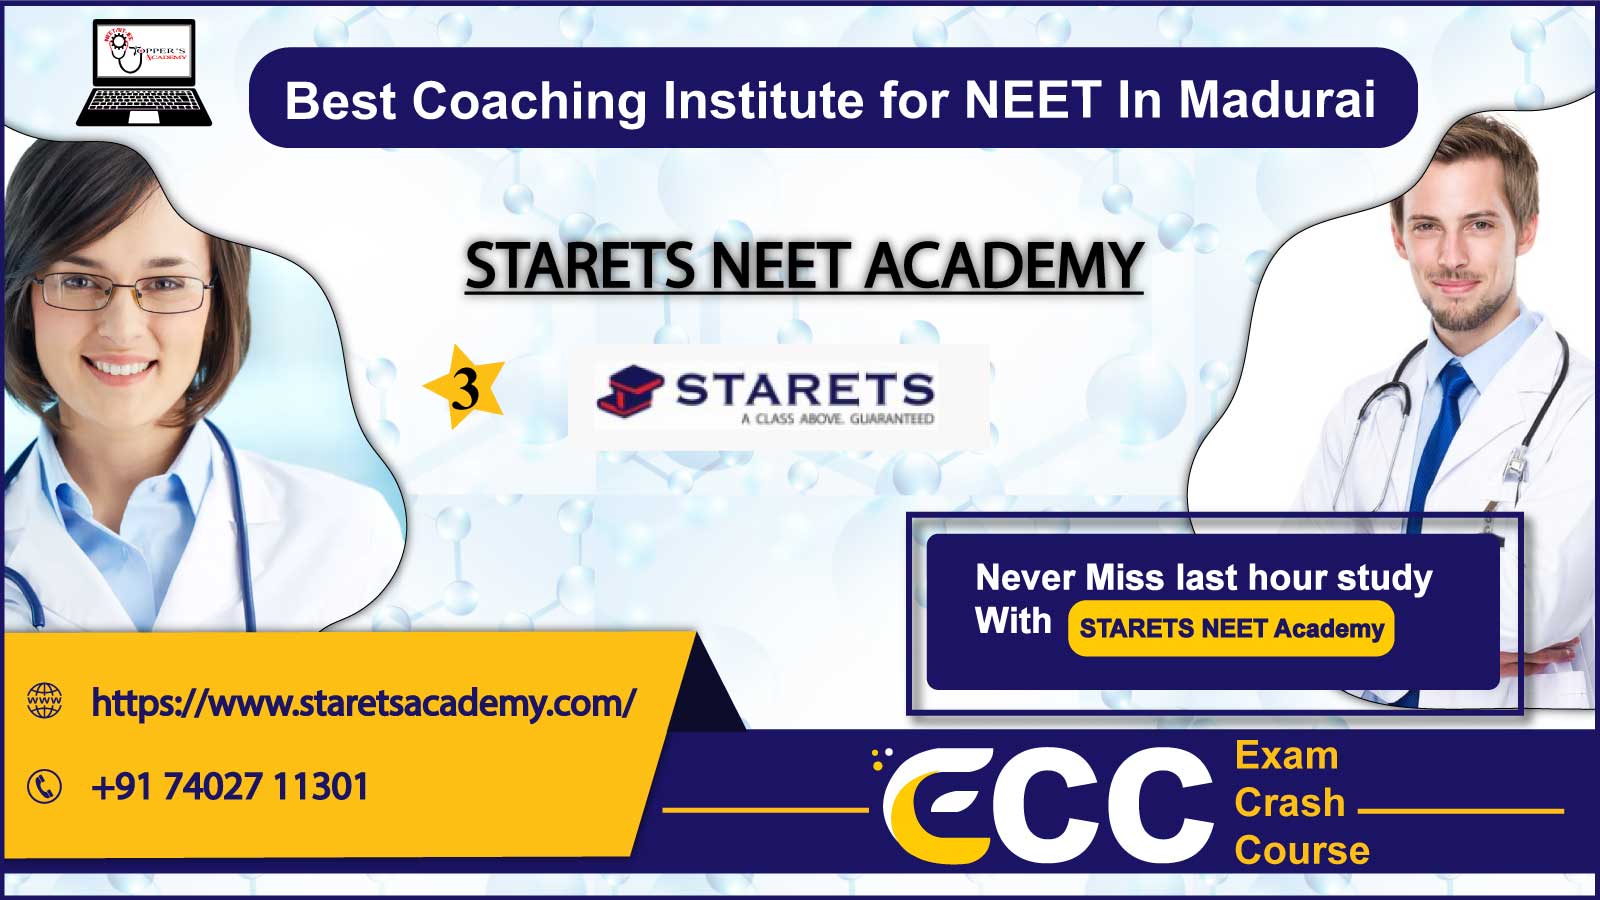 STARETS NEET Academy in Madurai